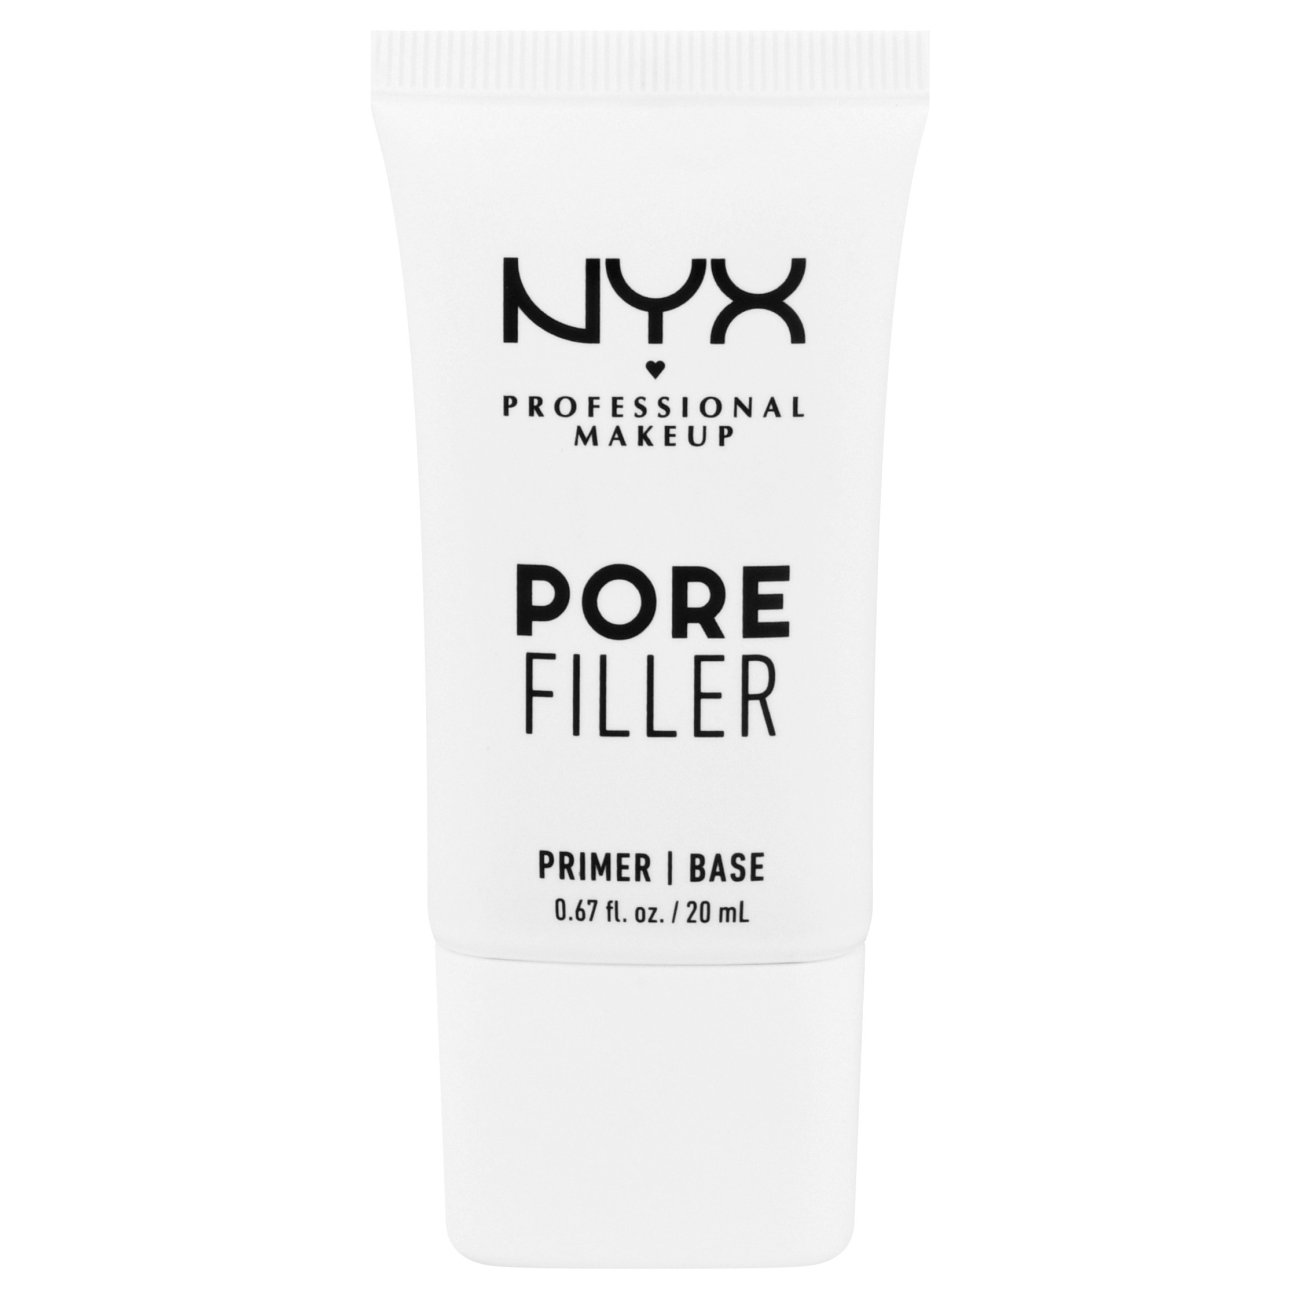 & Spray Setting Primer - Filler Primer H-E-B NYX Shop Pore at